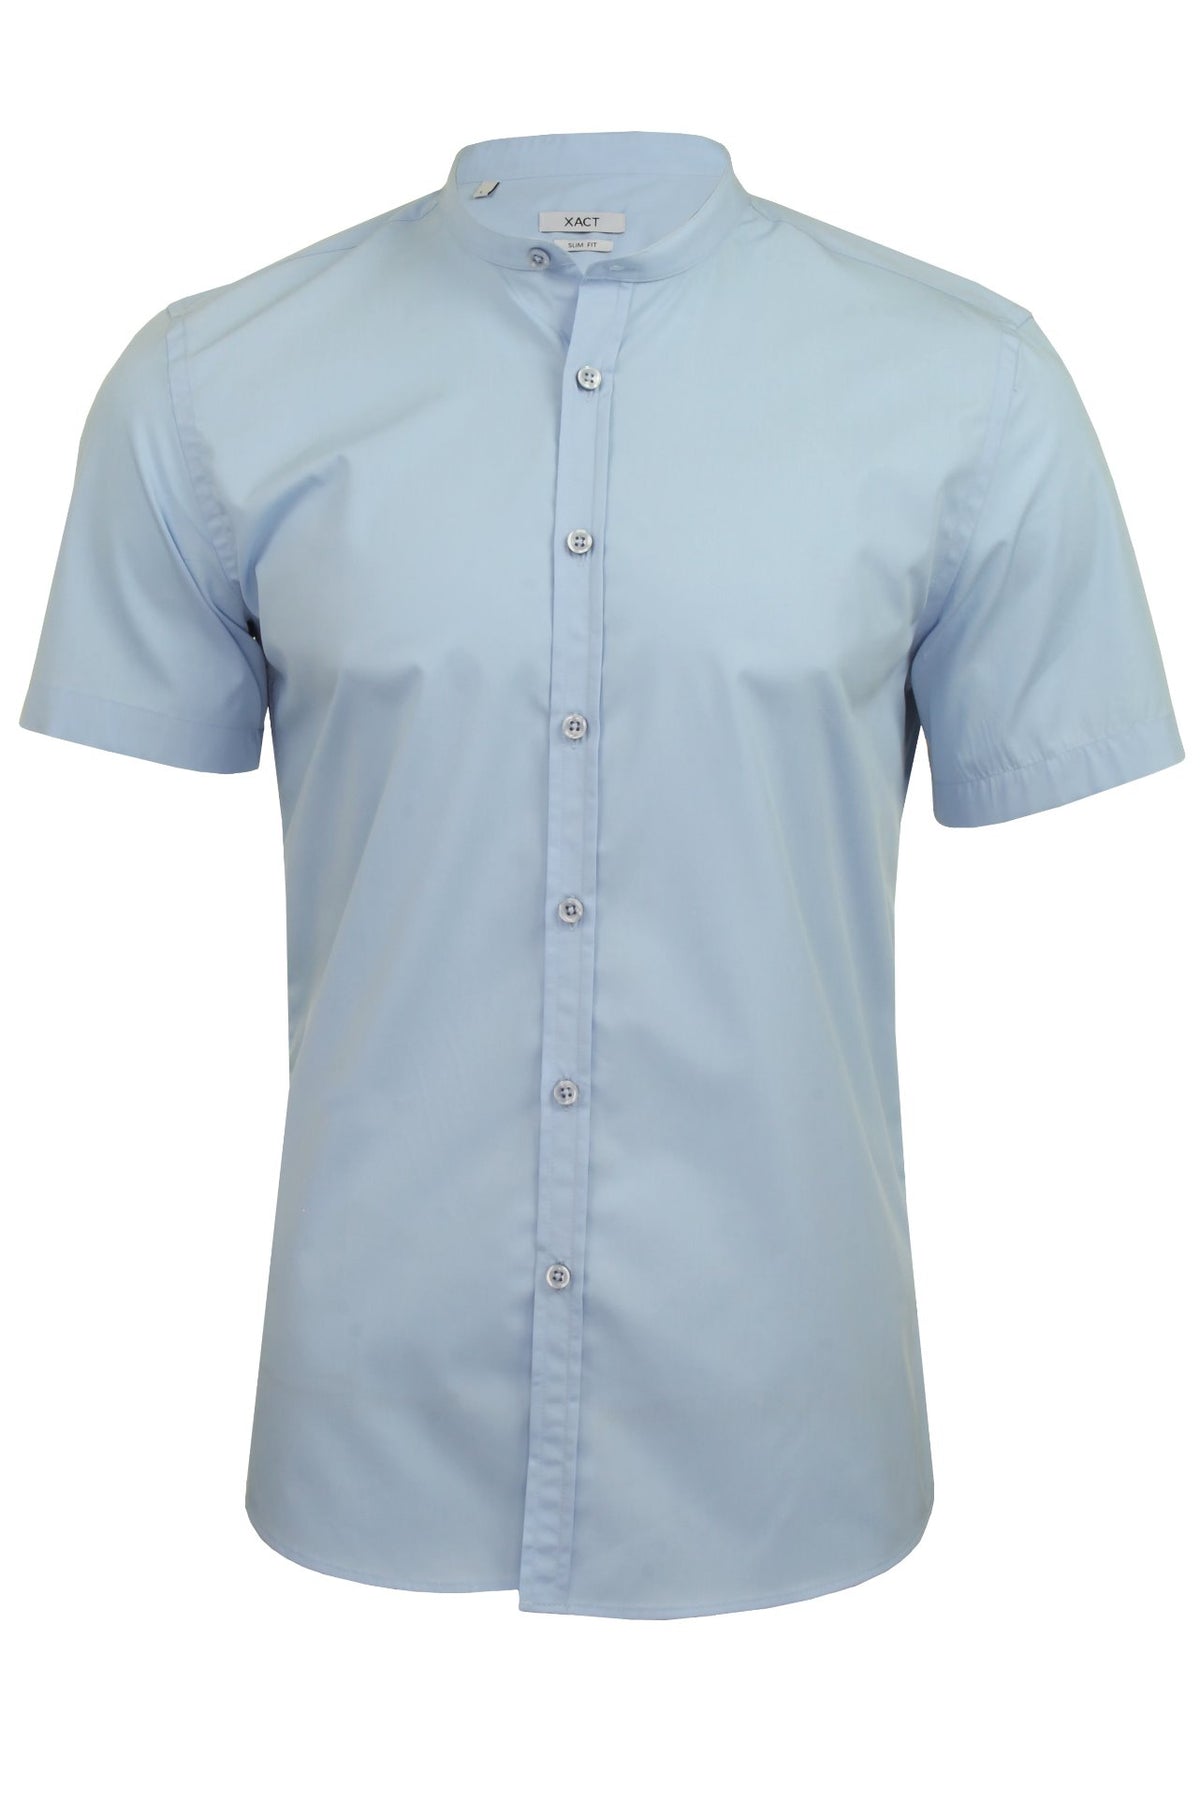 Xact Mens Grandad Collar Poplin Shirt Nehru - Short Sleeved - Slim Fit, 01, Xsh1069, Sky Blue